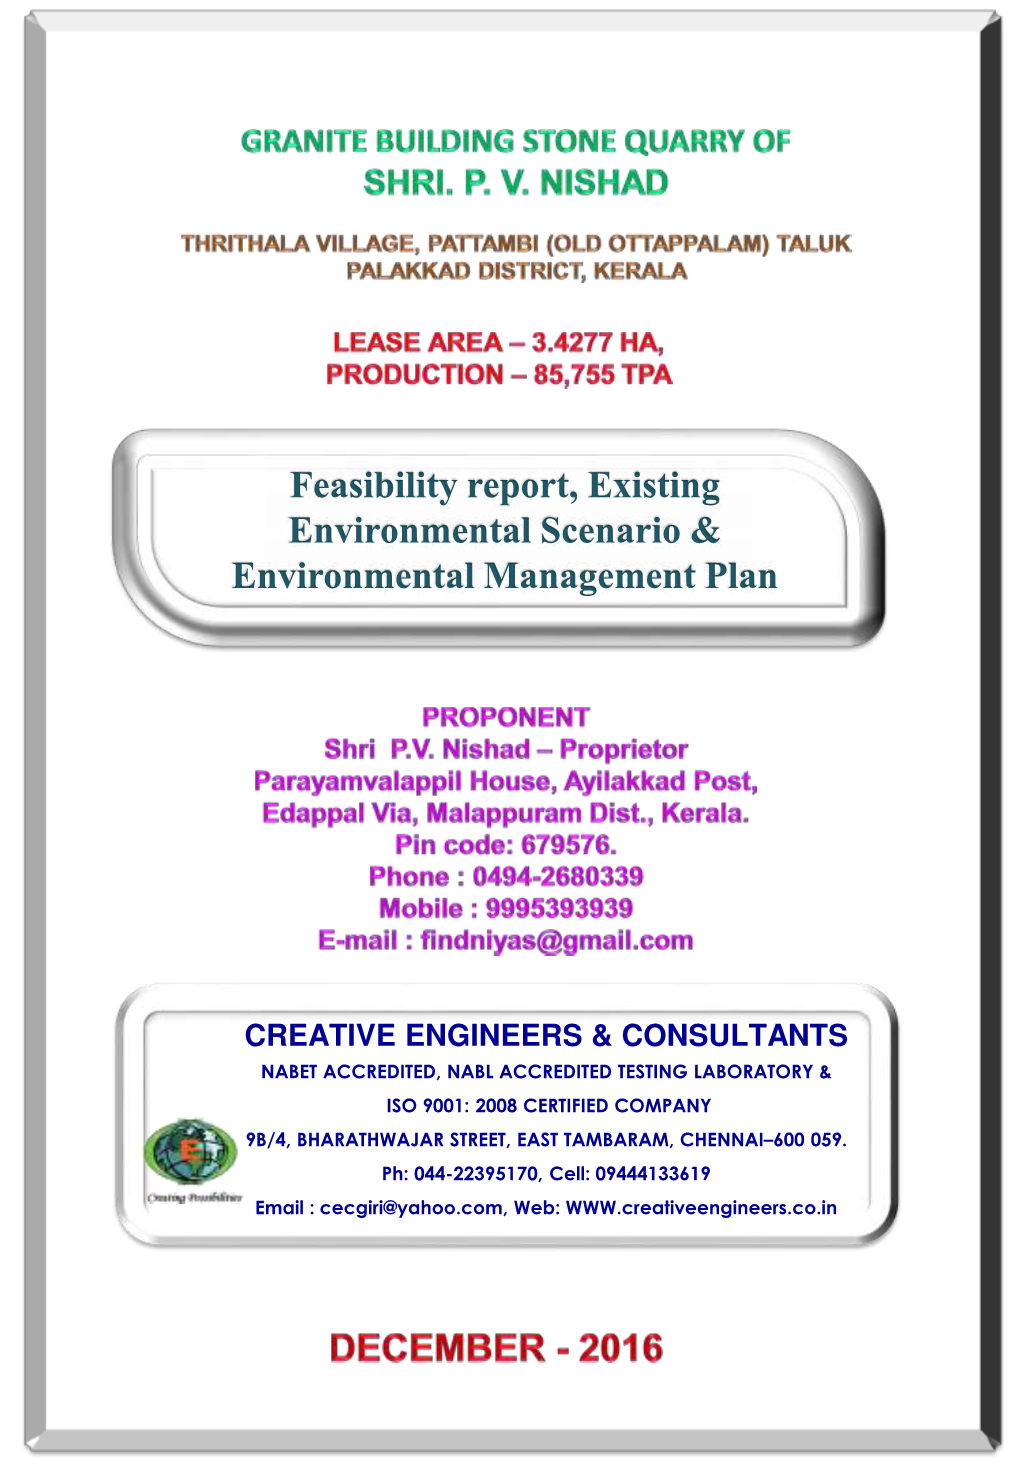 Feasibility Report, Existing Environmental Scenario & Environmental Management Plan